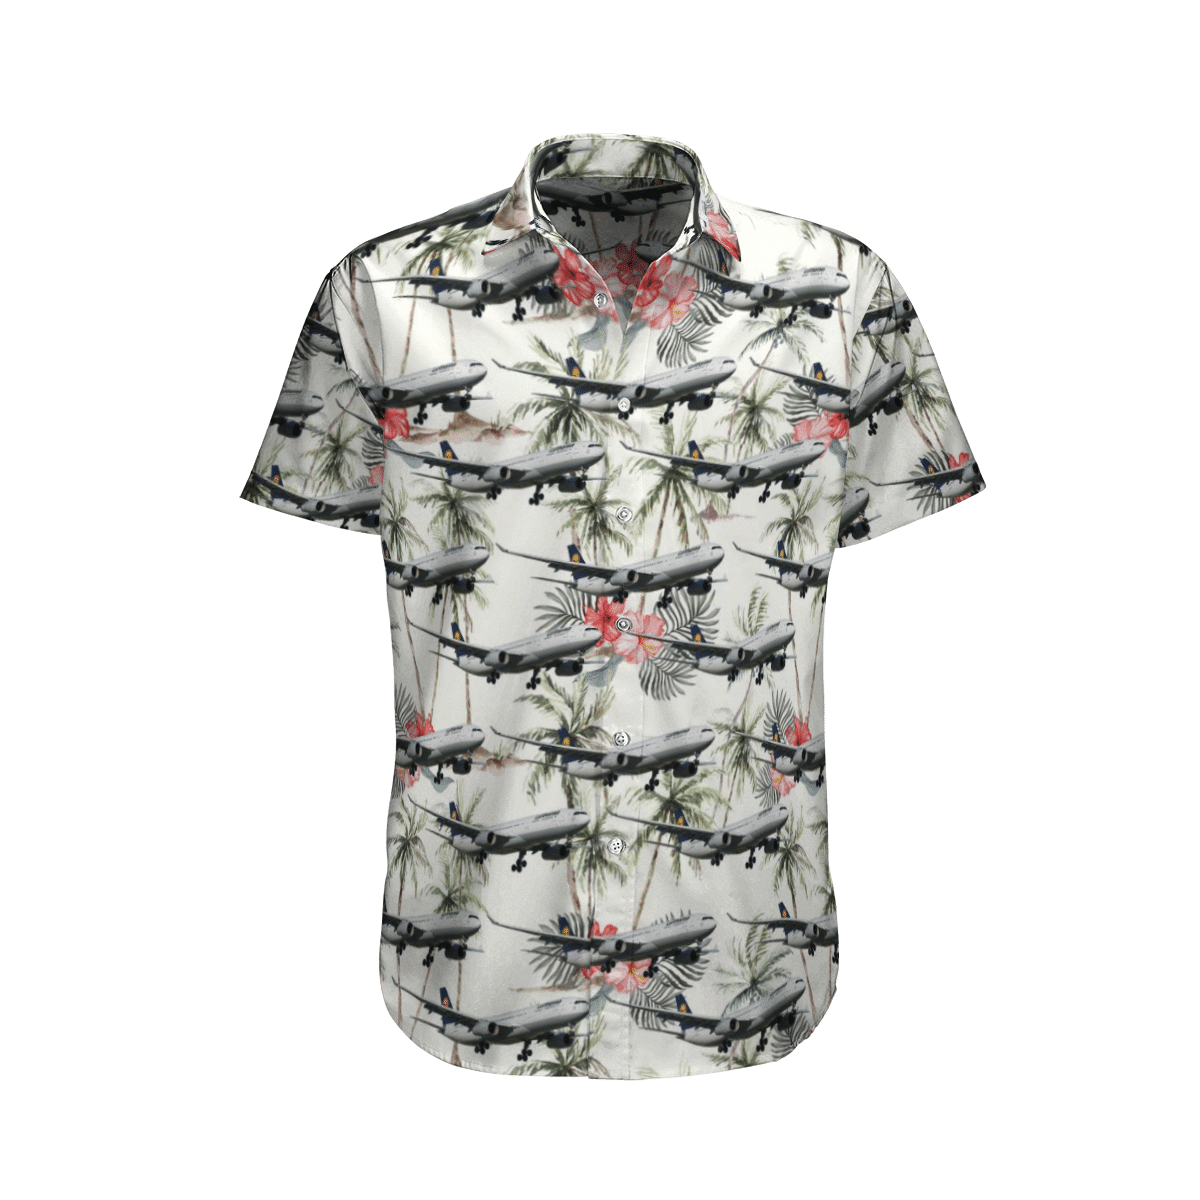 Enjoy your summer with top cool hawaiian shirt below 198